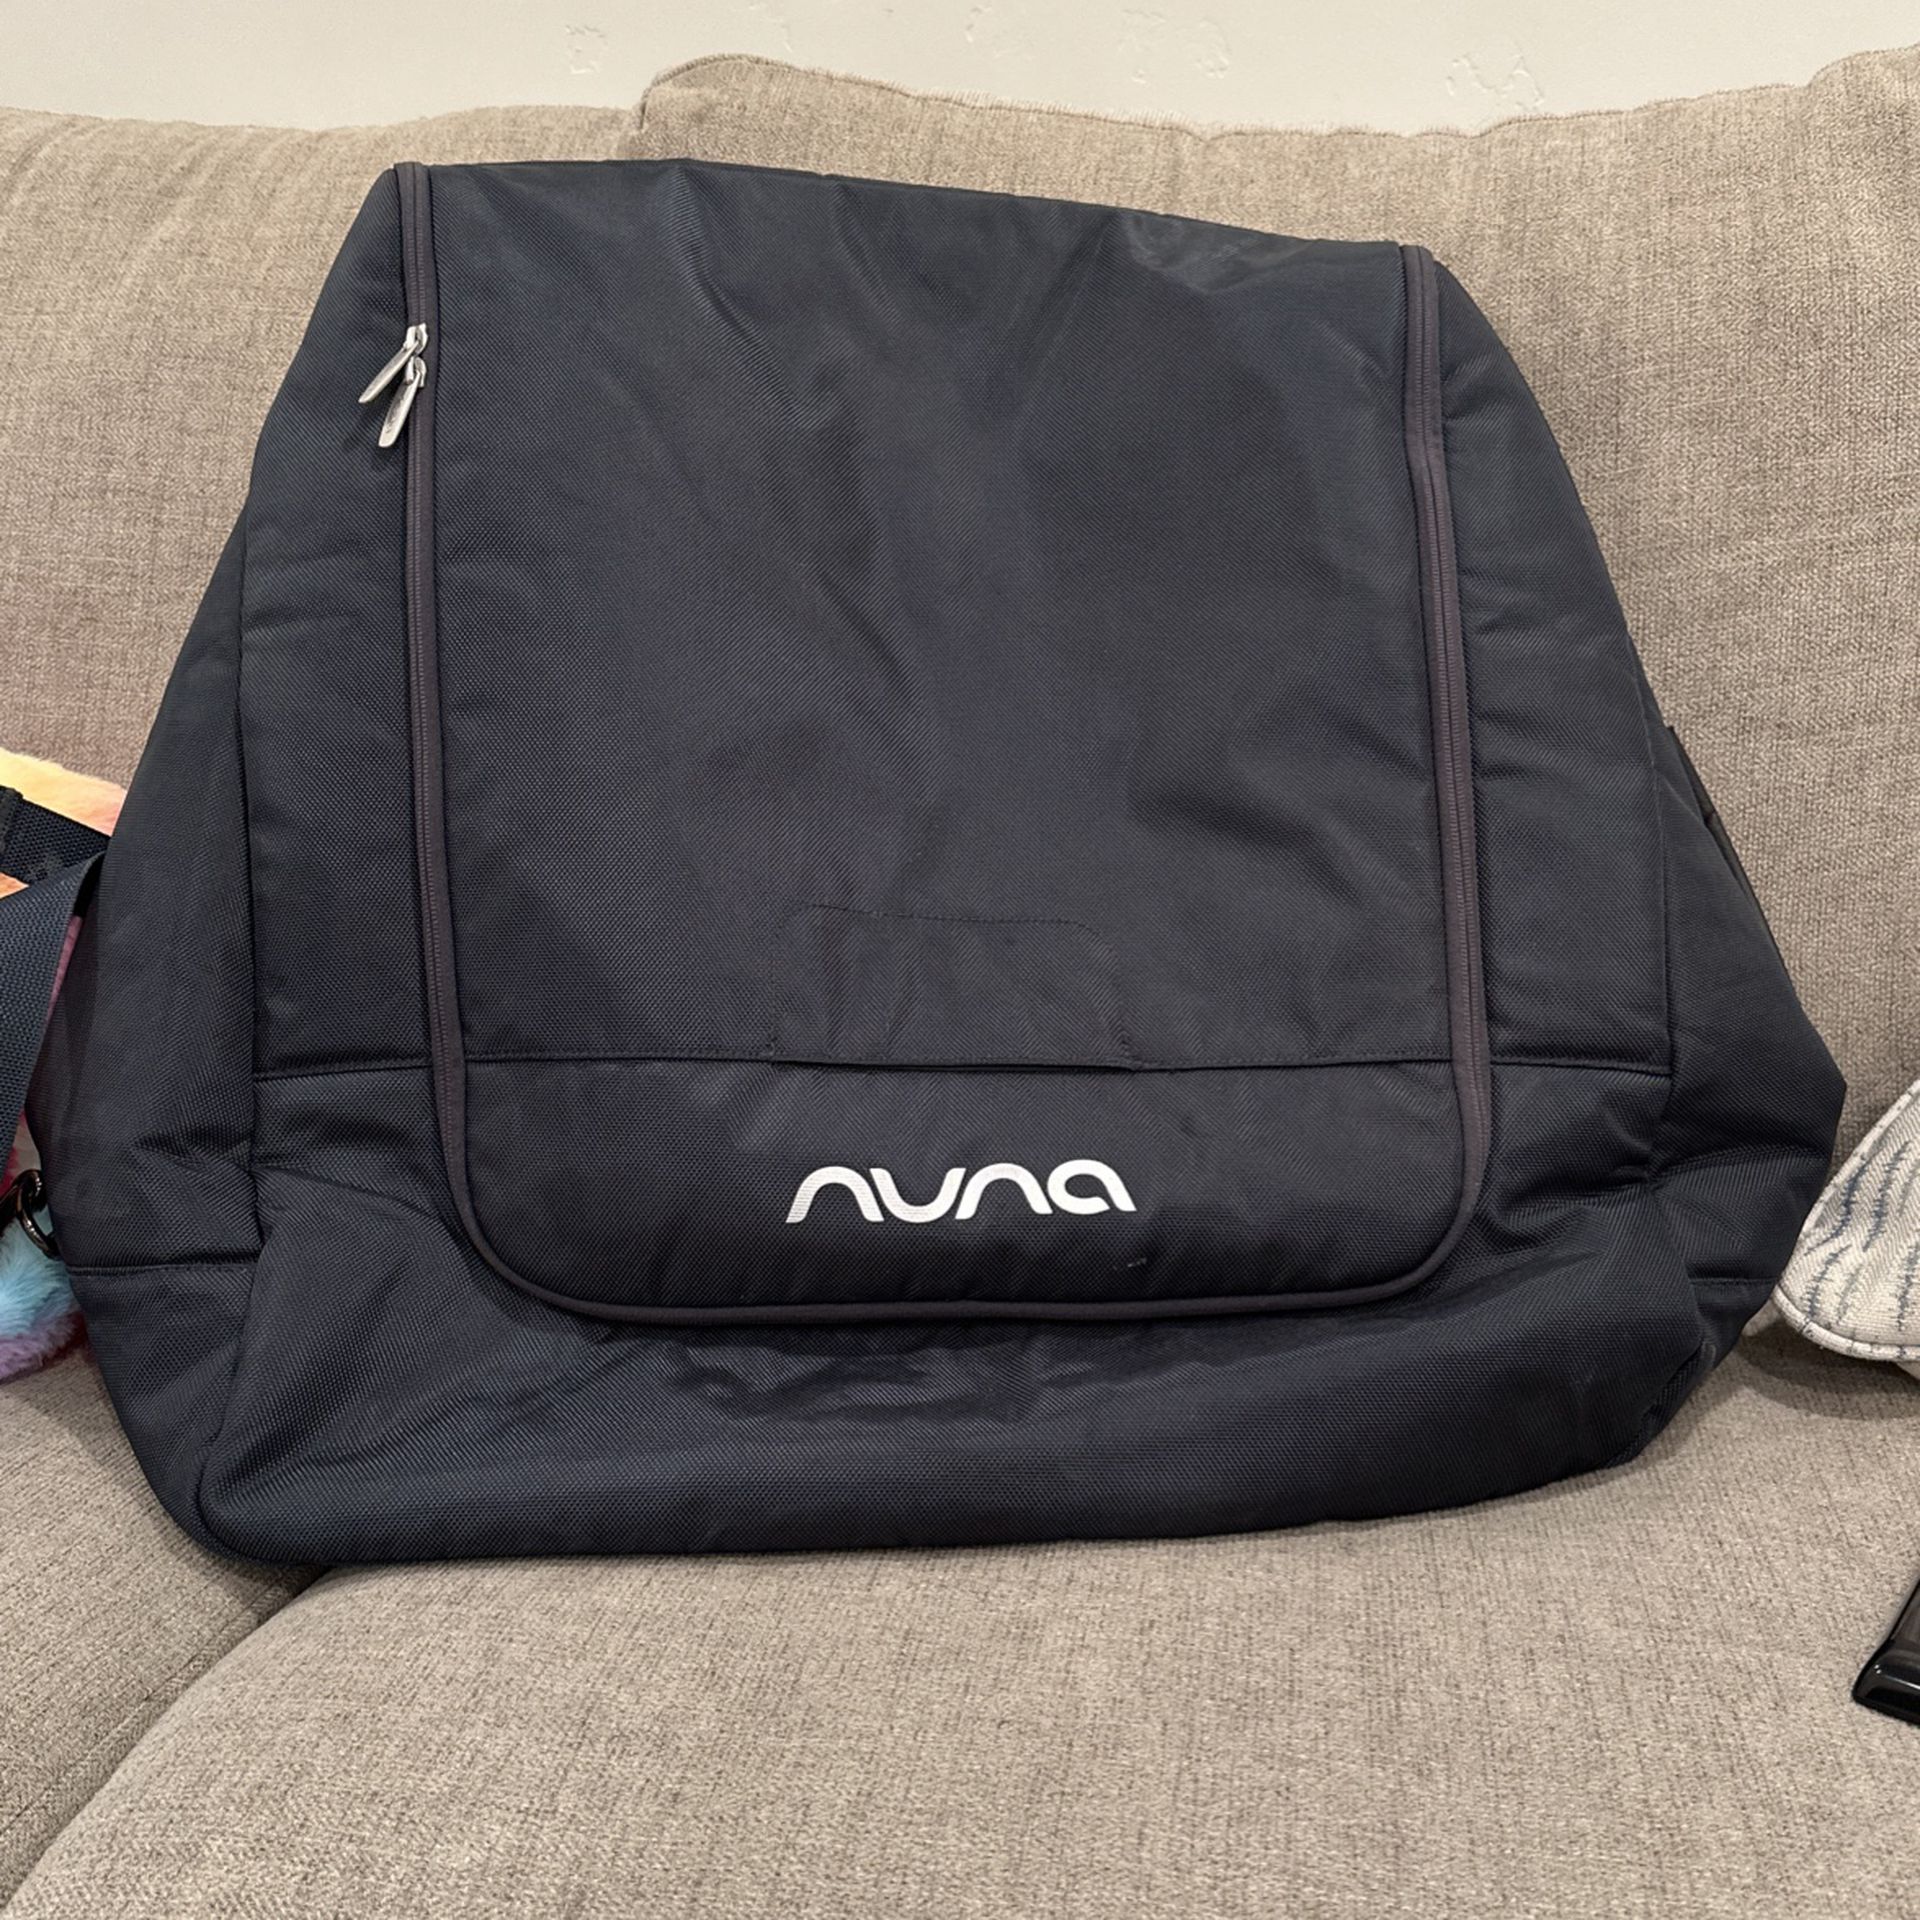 Nuna Stroller Travel Bag